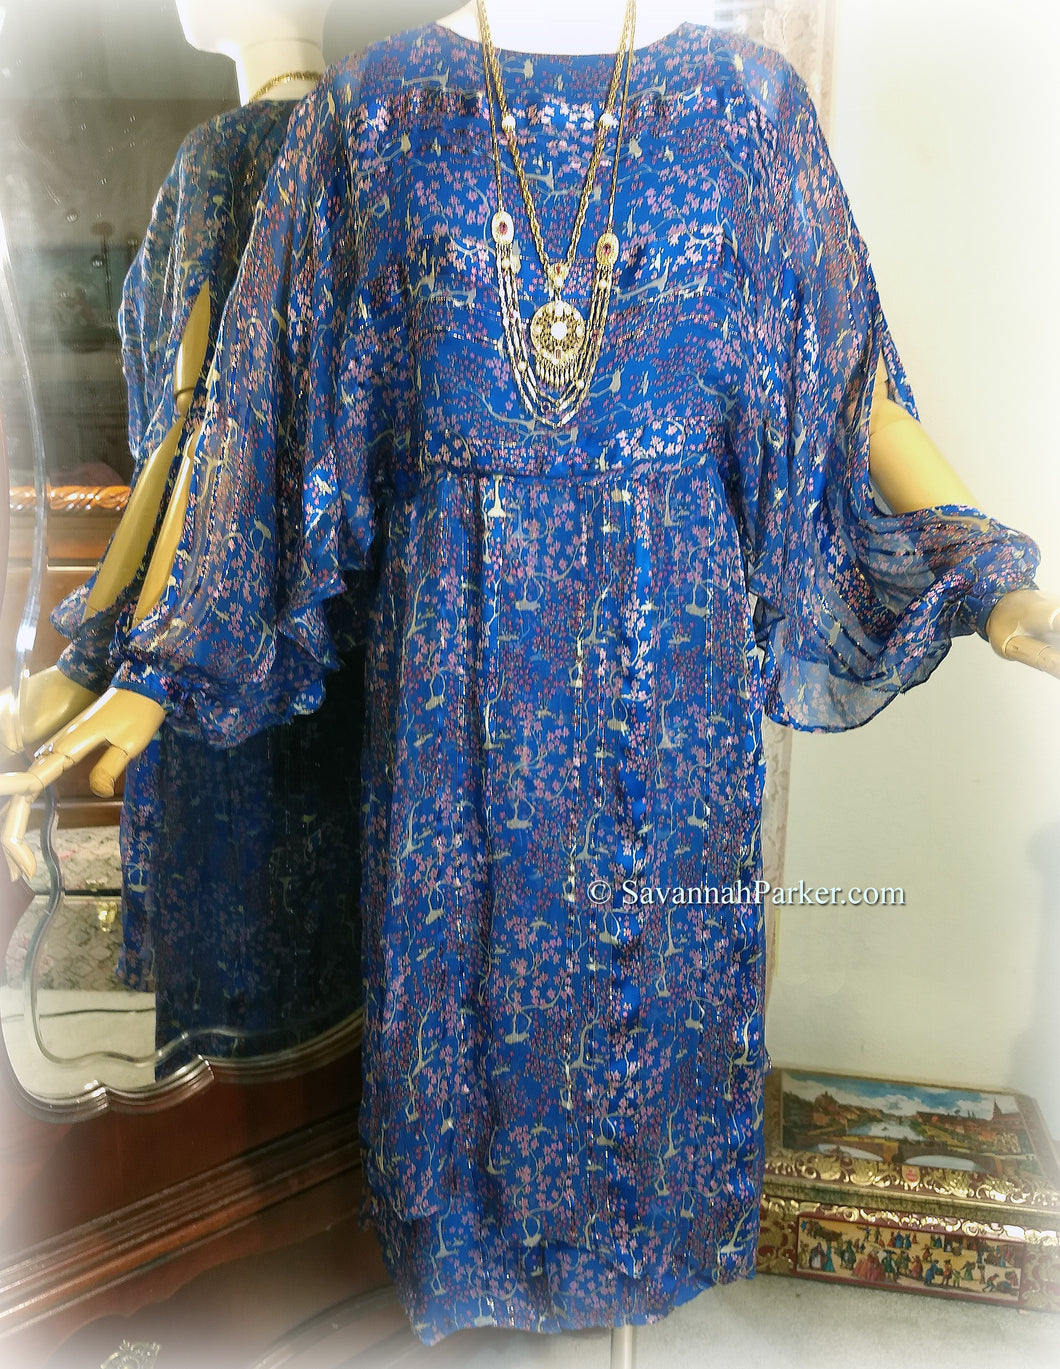 SOLD Vintage Deep Royal Blue Pink Metallic Boho 70s 80s Silk Dress / Joseph Magnin / The Silk Farm Designed by Icinoo / Glittering Gold Threads